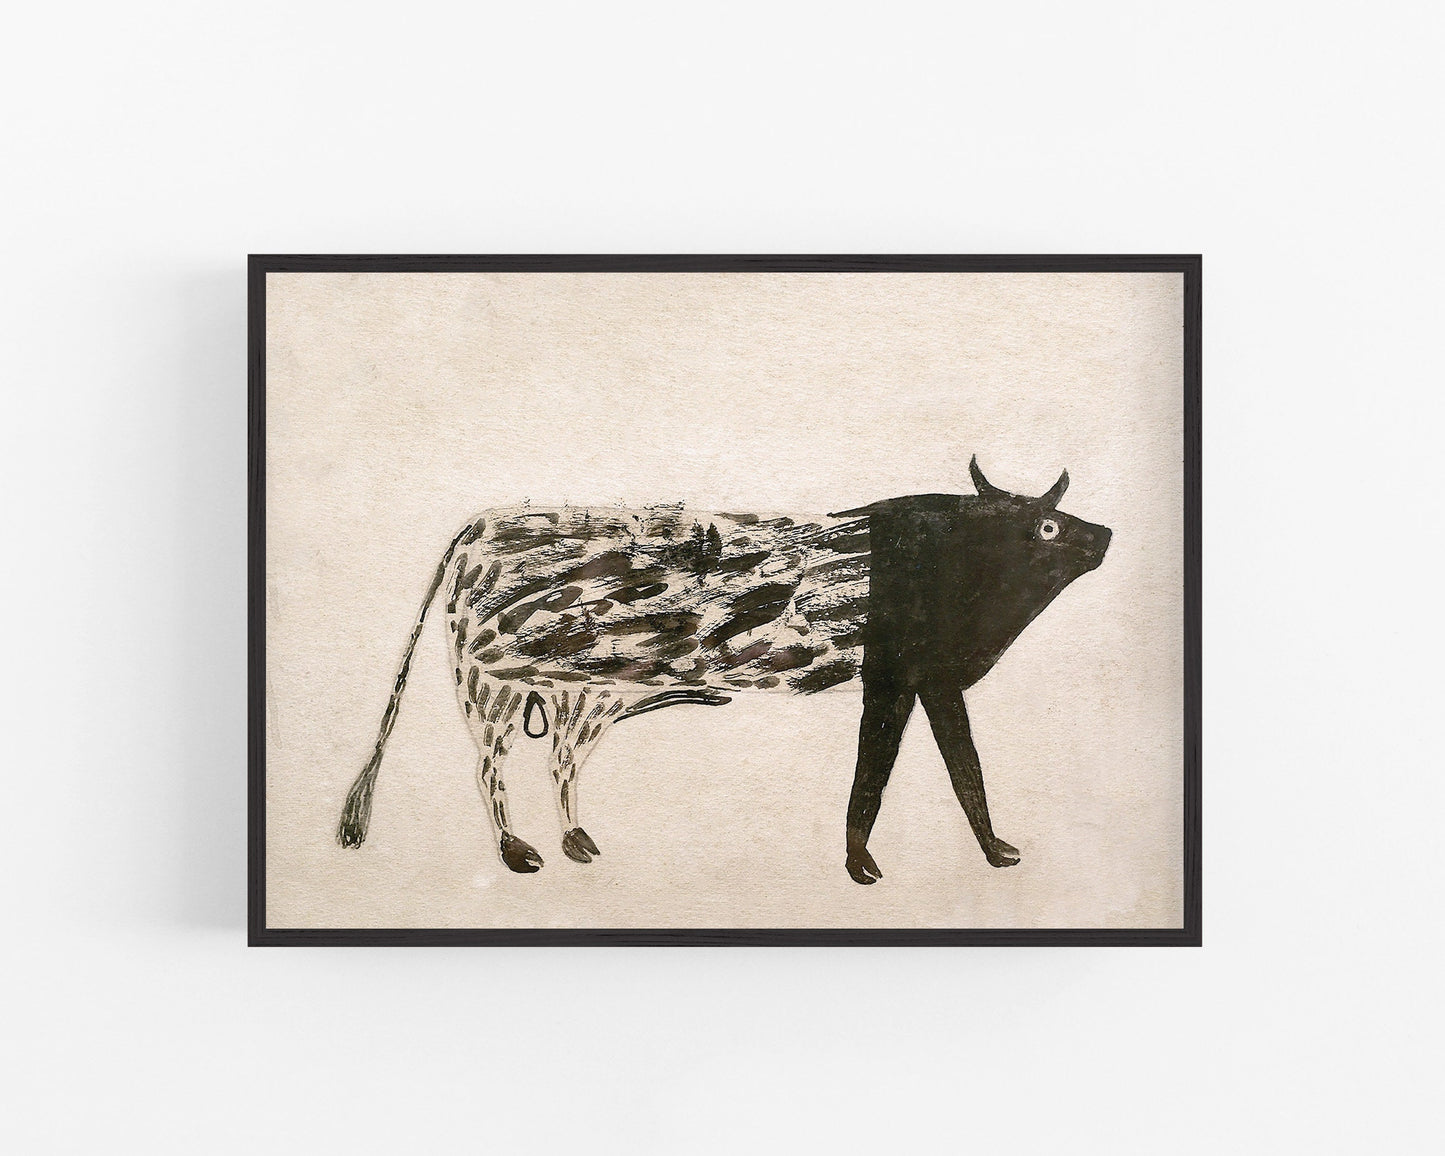 Bill Traylor Americana art | Spotted bull | Farm folk art | African American self-taught artist | Modern vintage wall décor